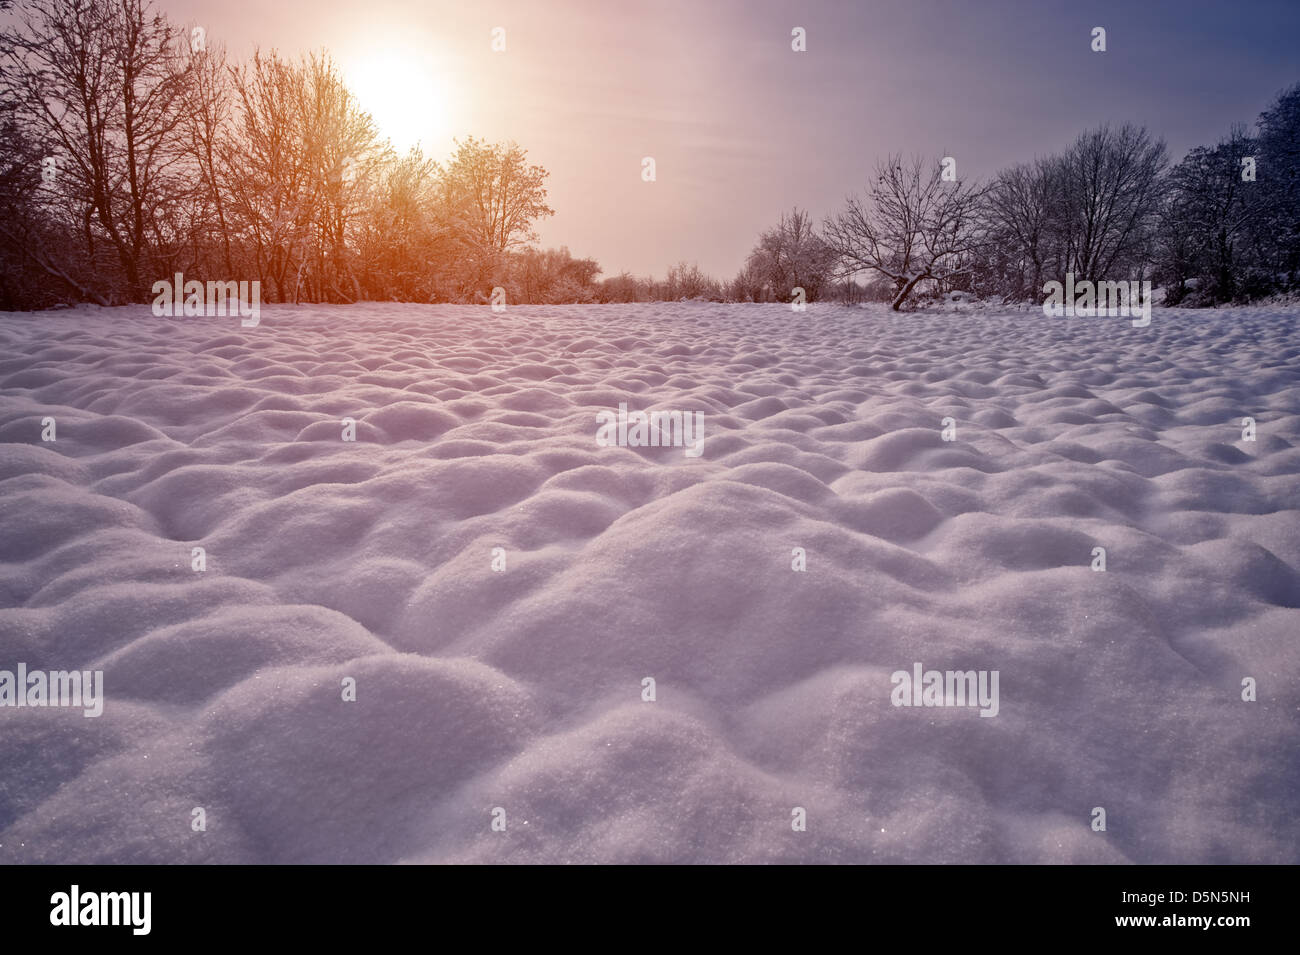 snowy hillock in morning field Stock Photo